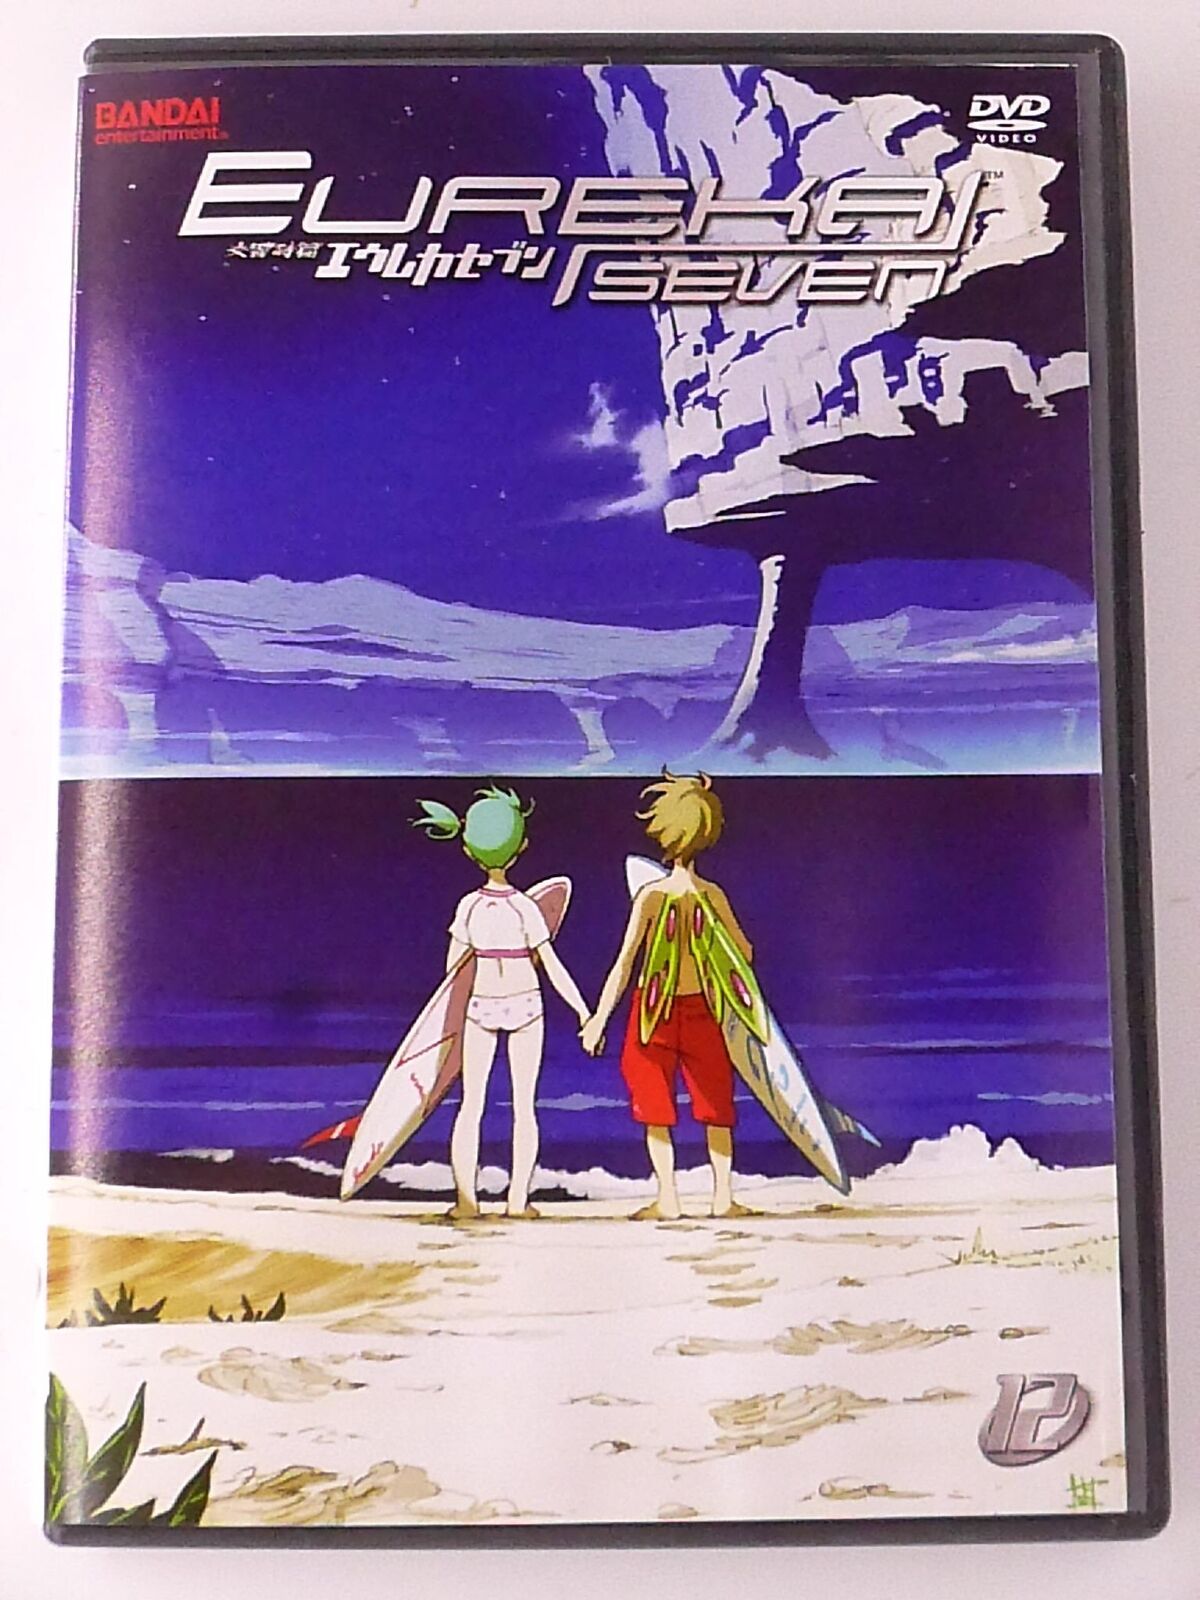 Eureka Seven (DVD, episodes 47-50) - I1225